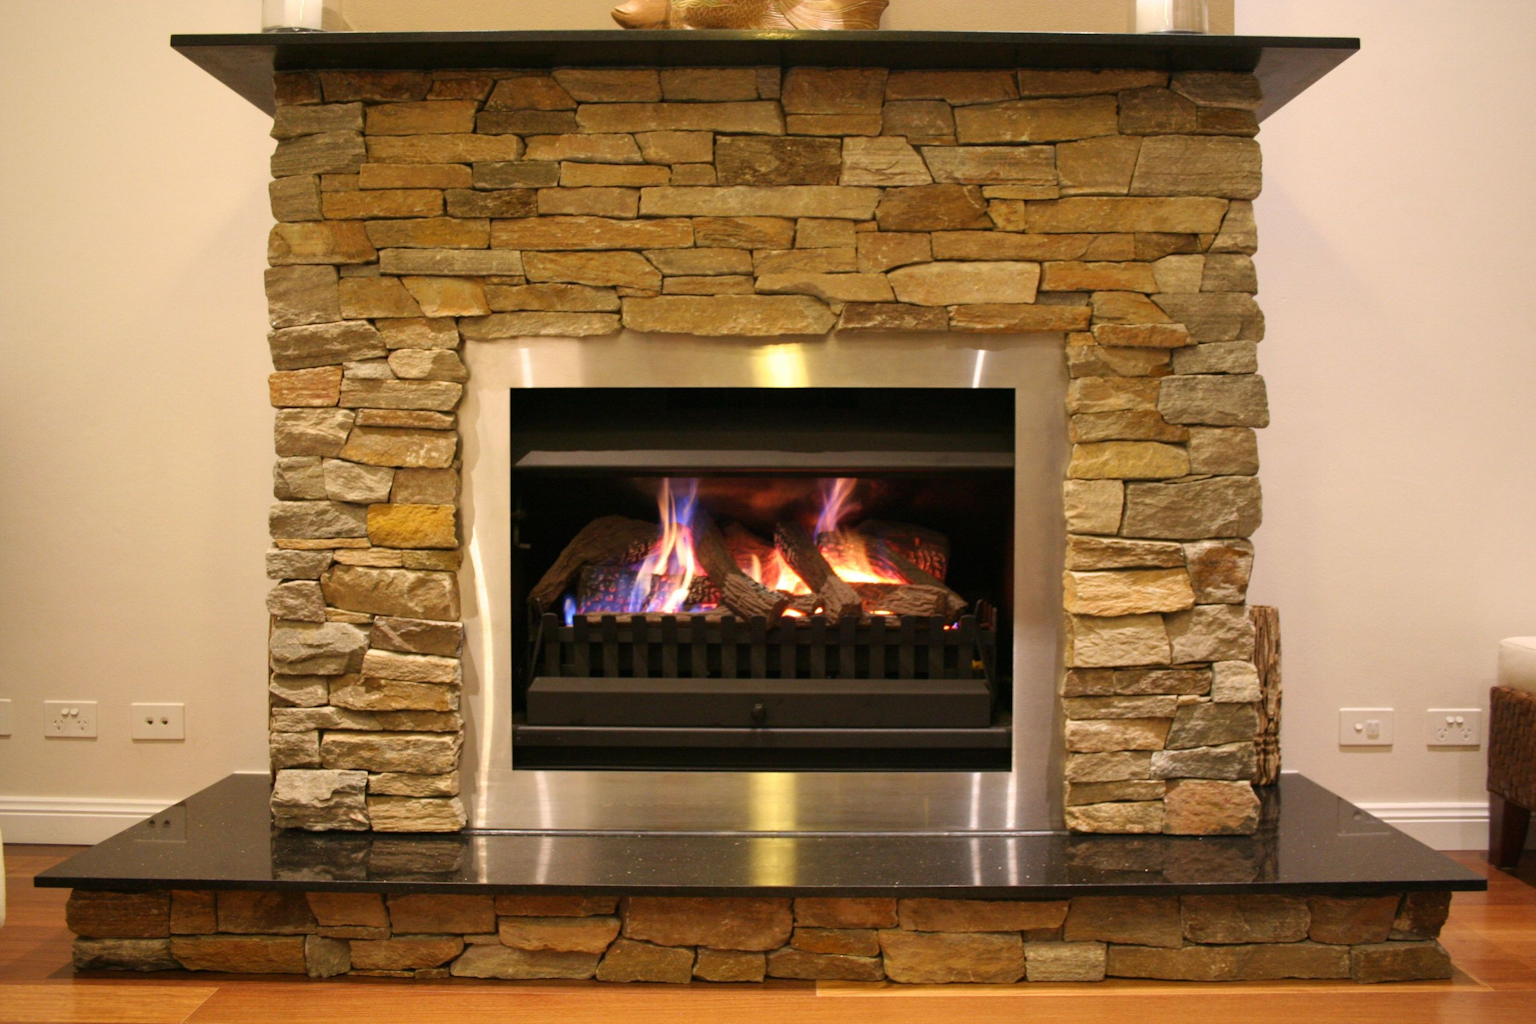 Mitta Mitta drystone fireplace